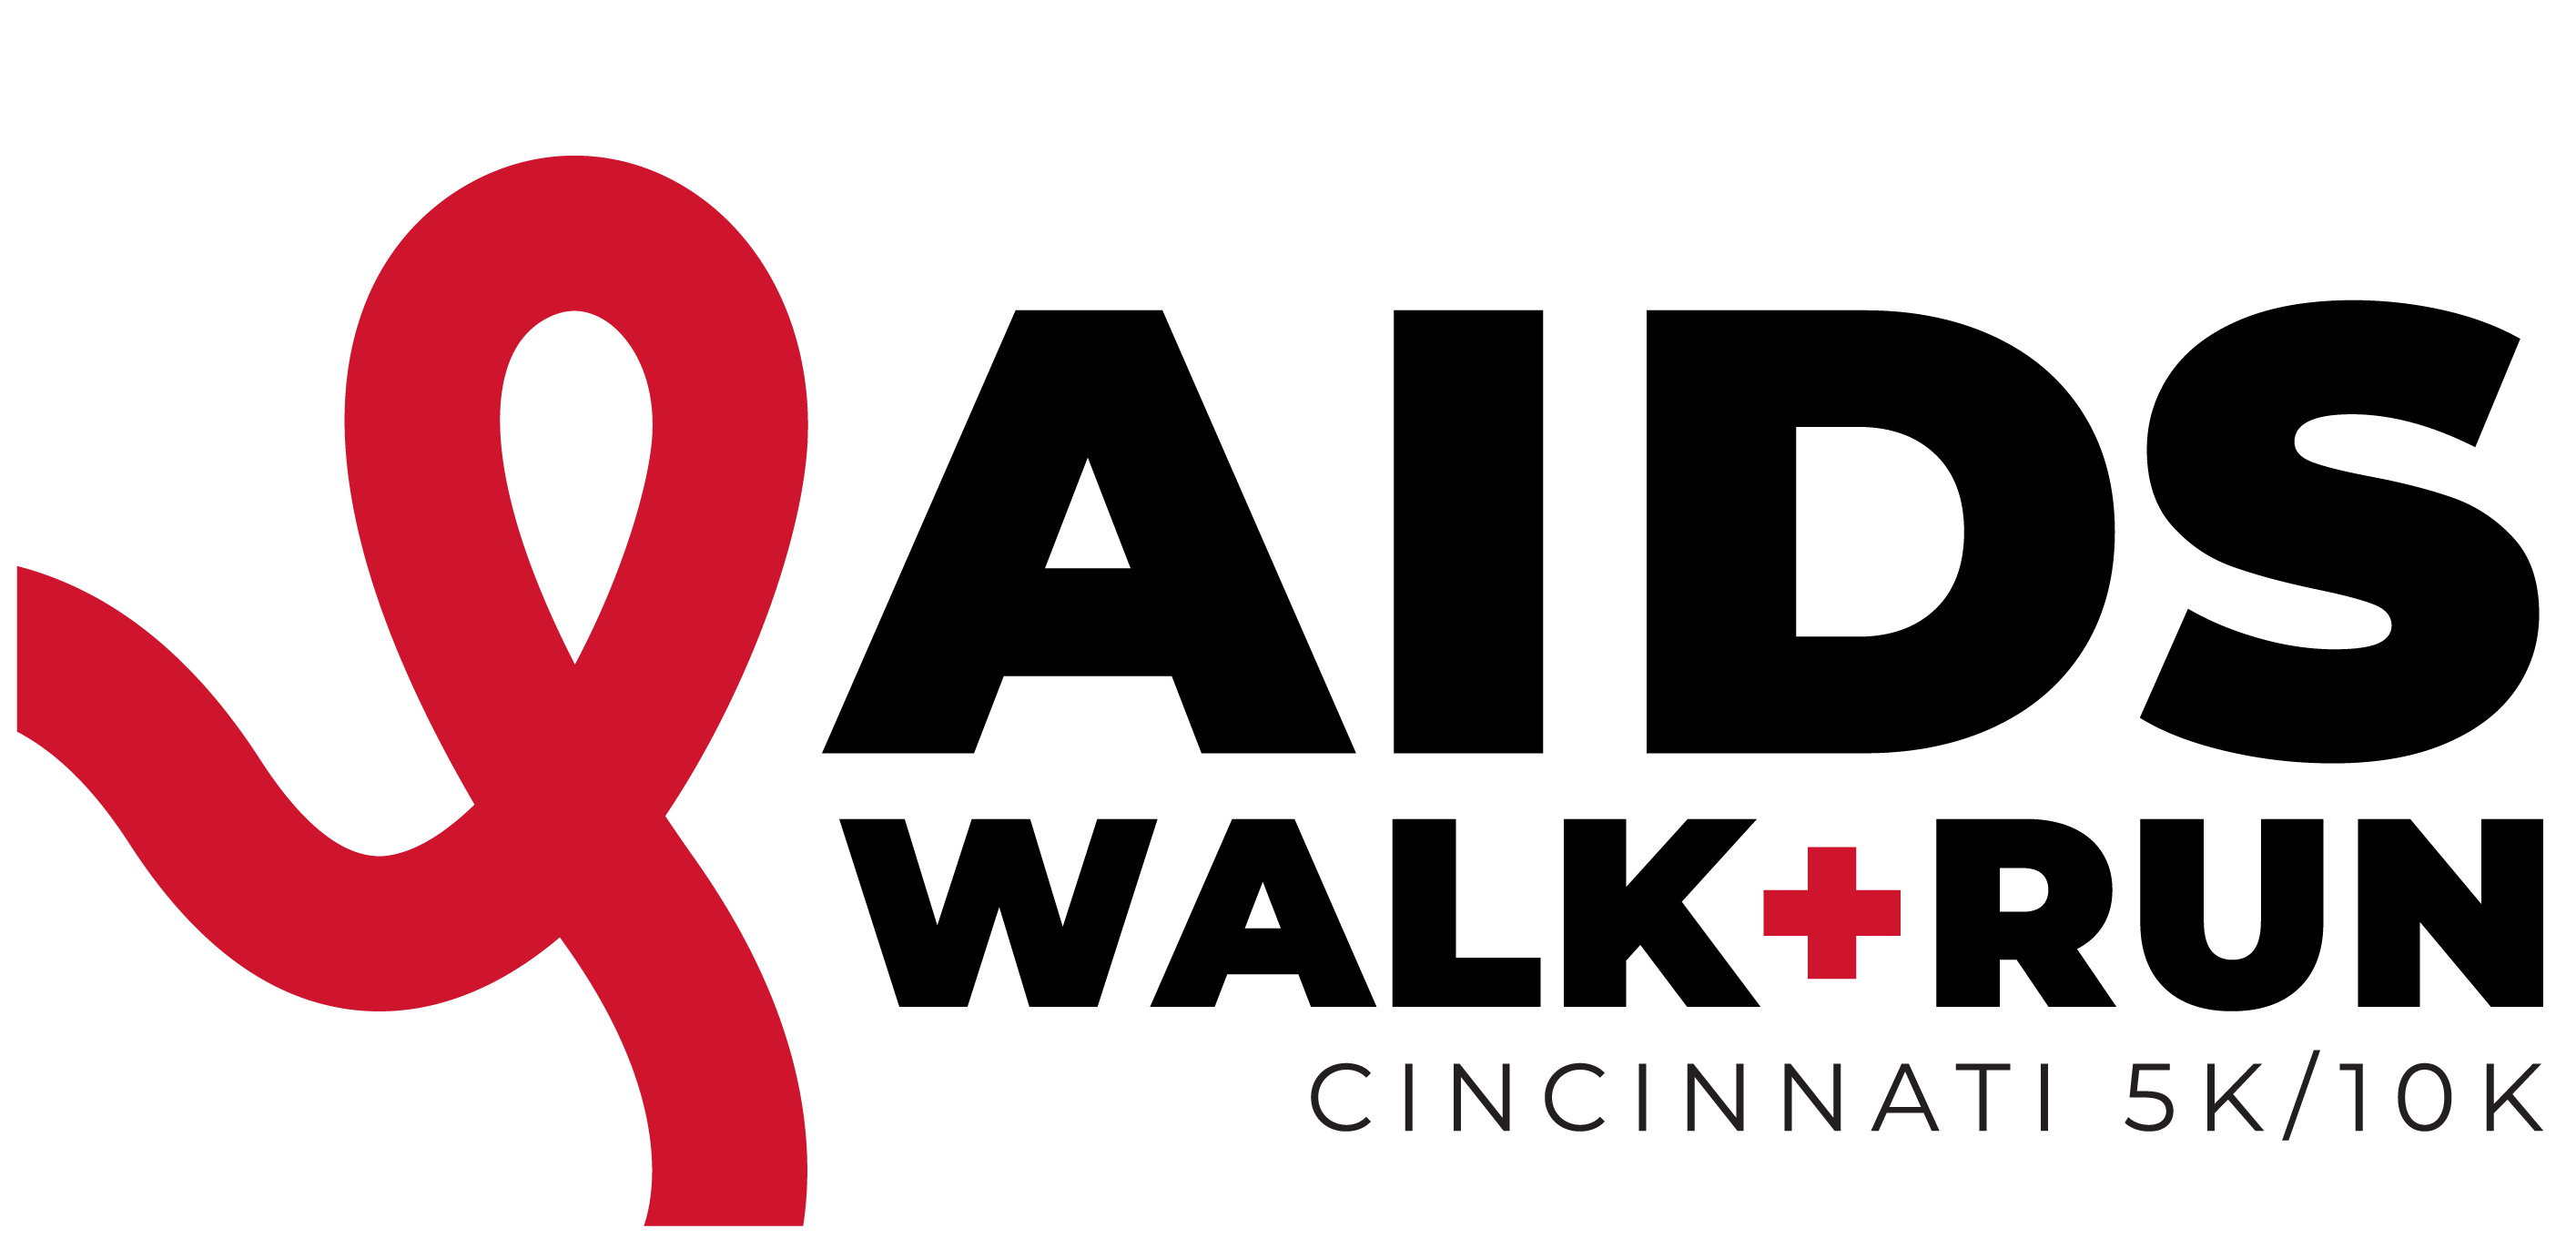 "AIDS Walk + Run Cincinnati 5k/10k" Logo